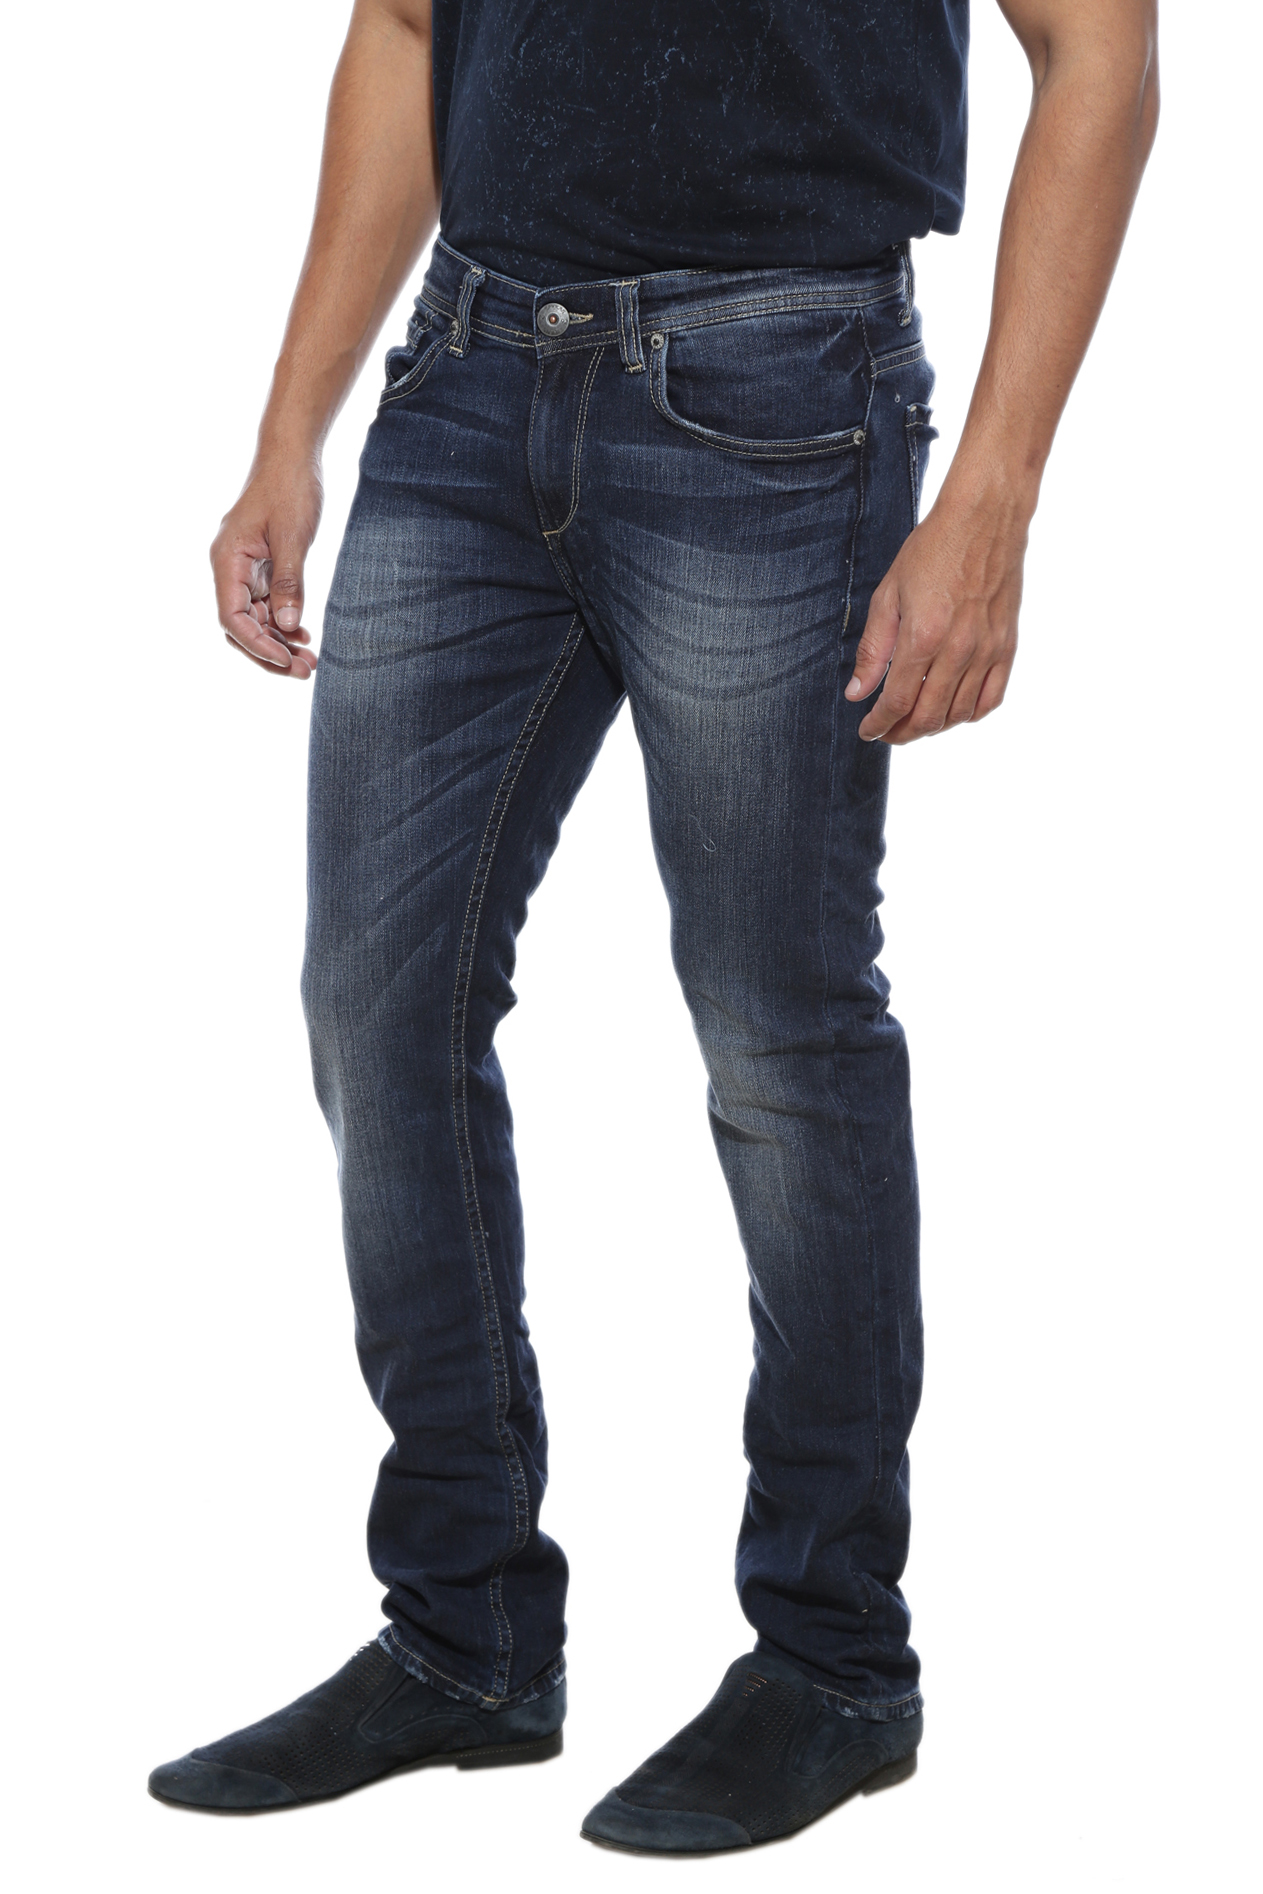 Buy Spykar Men's Blue Skinny Fit Jeans Online @ â¹1799 from ShopClues